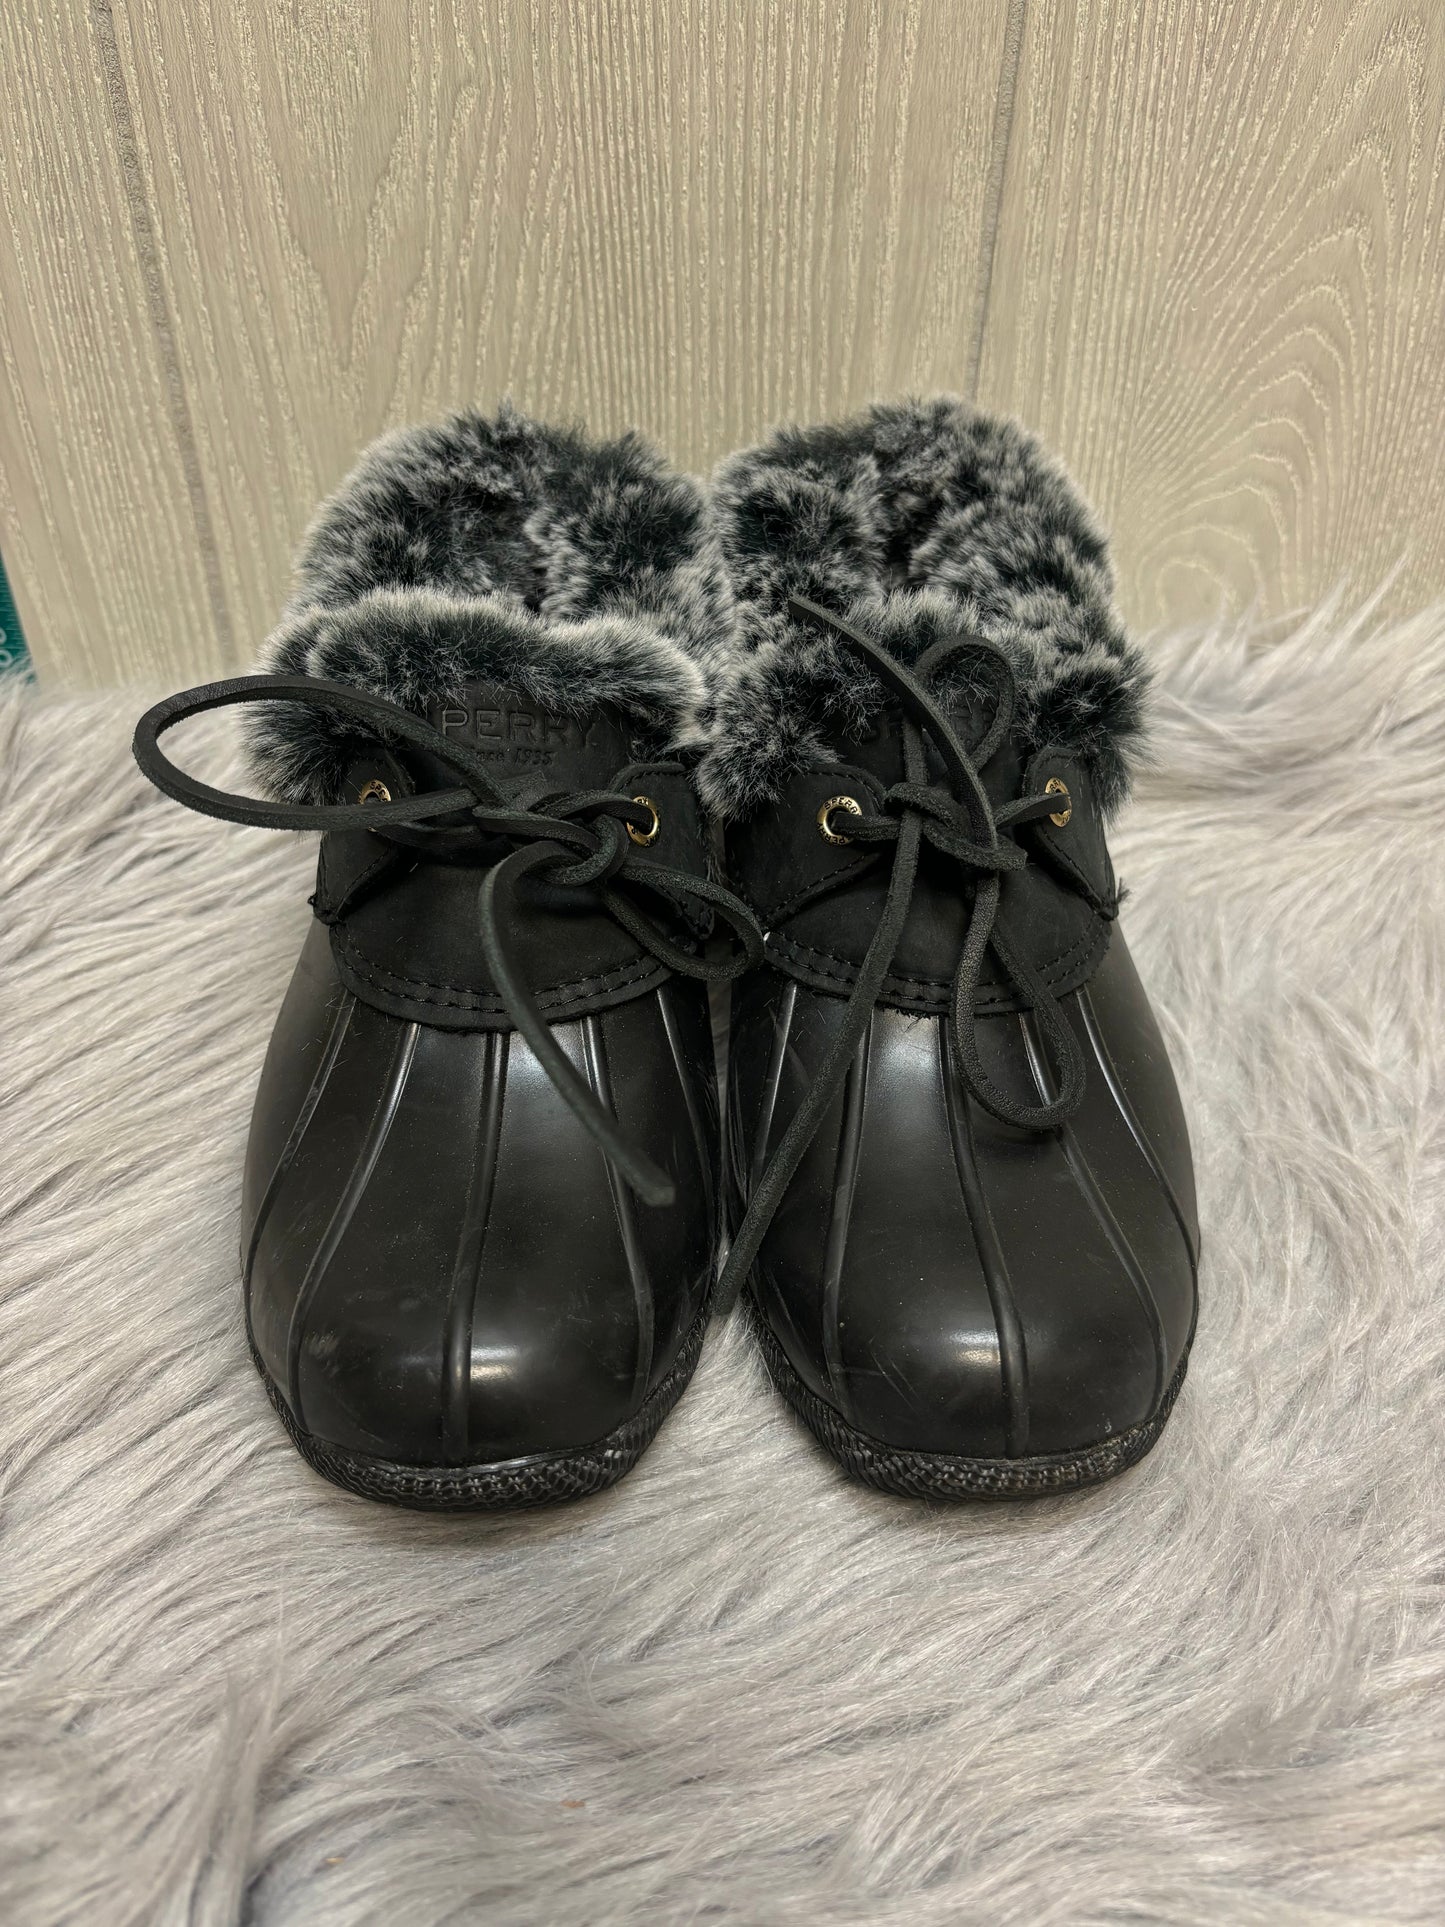 Black Boots Rain Sperry, Size 7.5